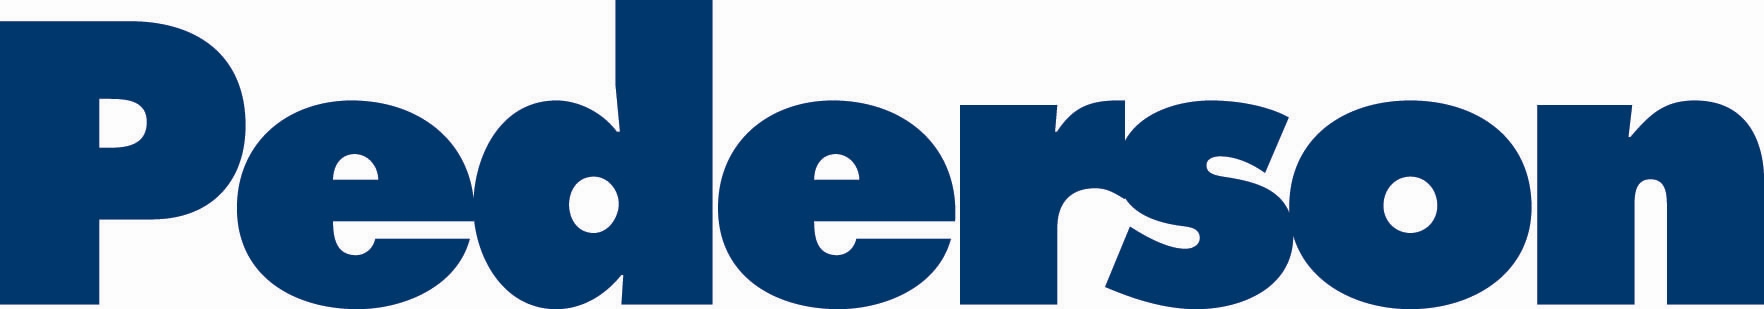 Pederson Logo